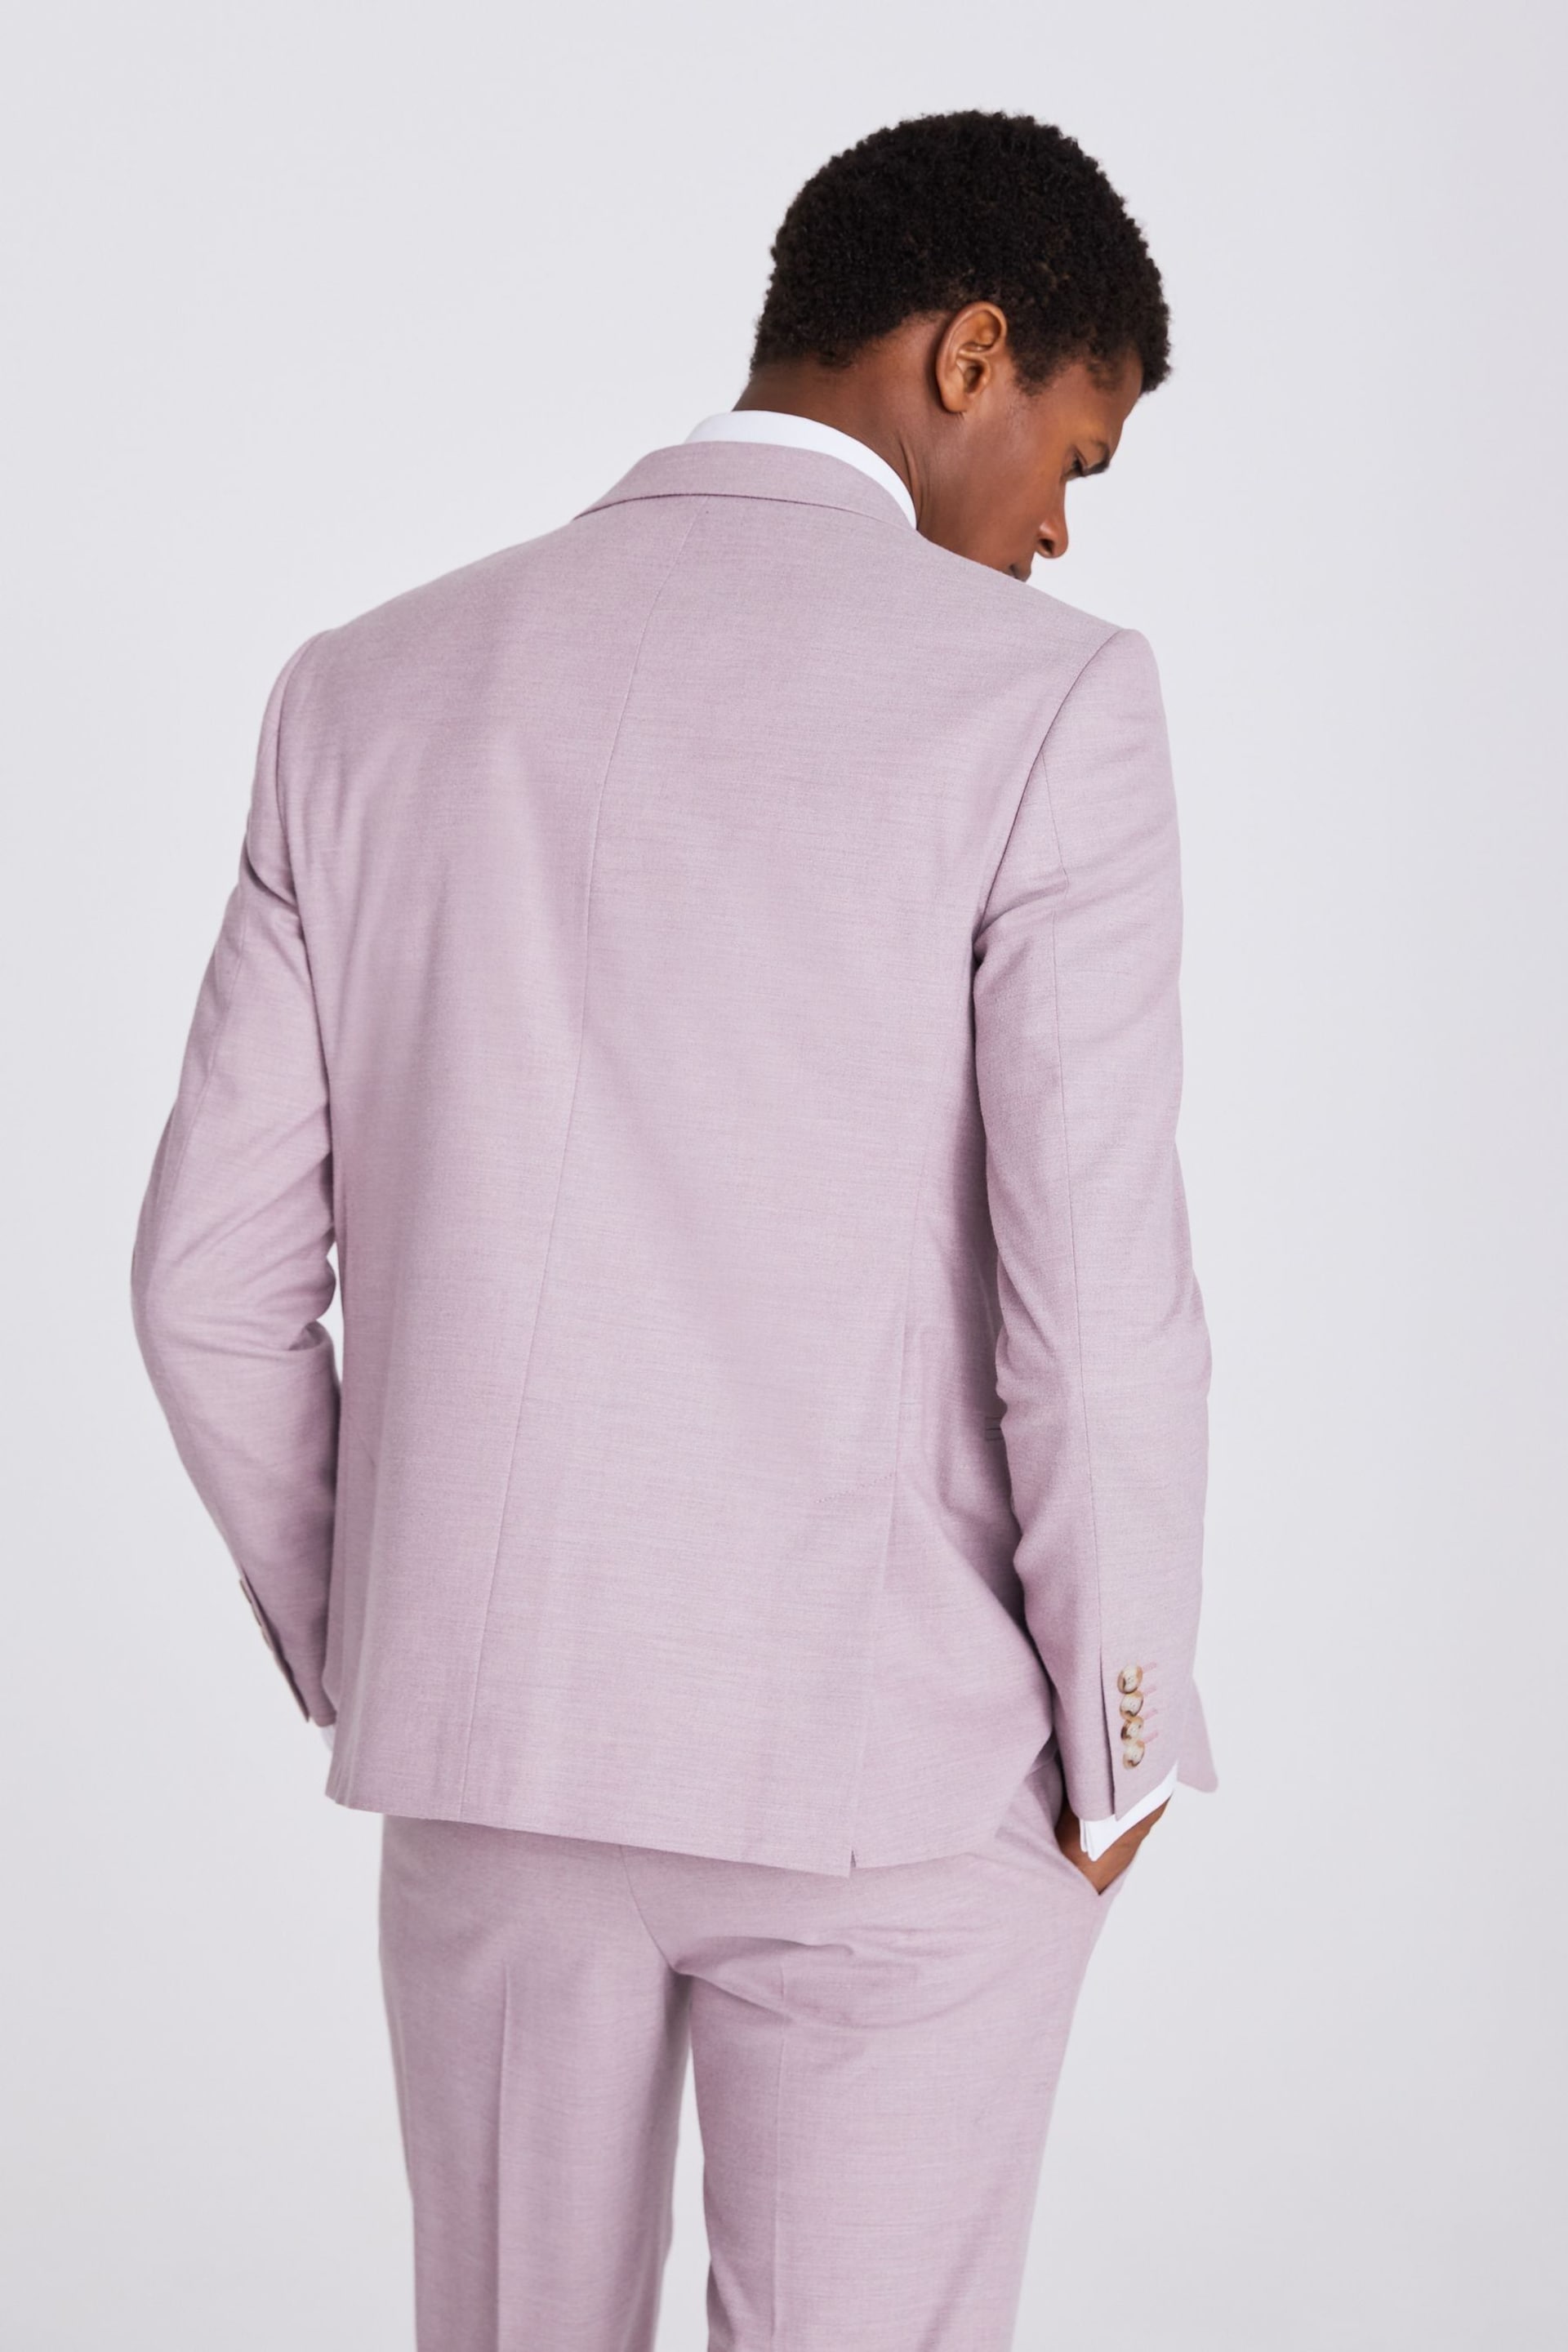 MOSS Pink Slim Fit Quartz Jacket - Image 3 of 5